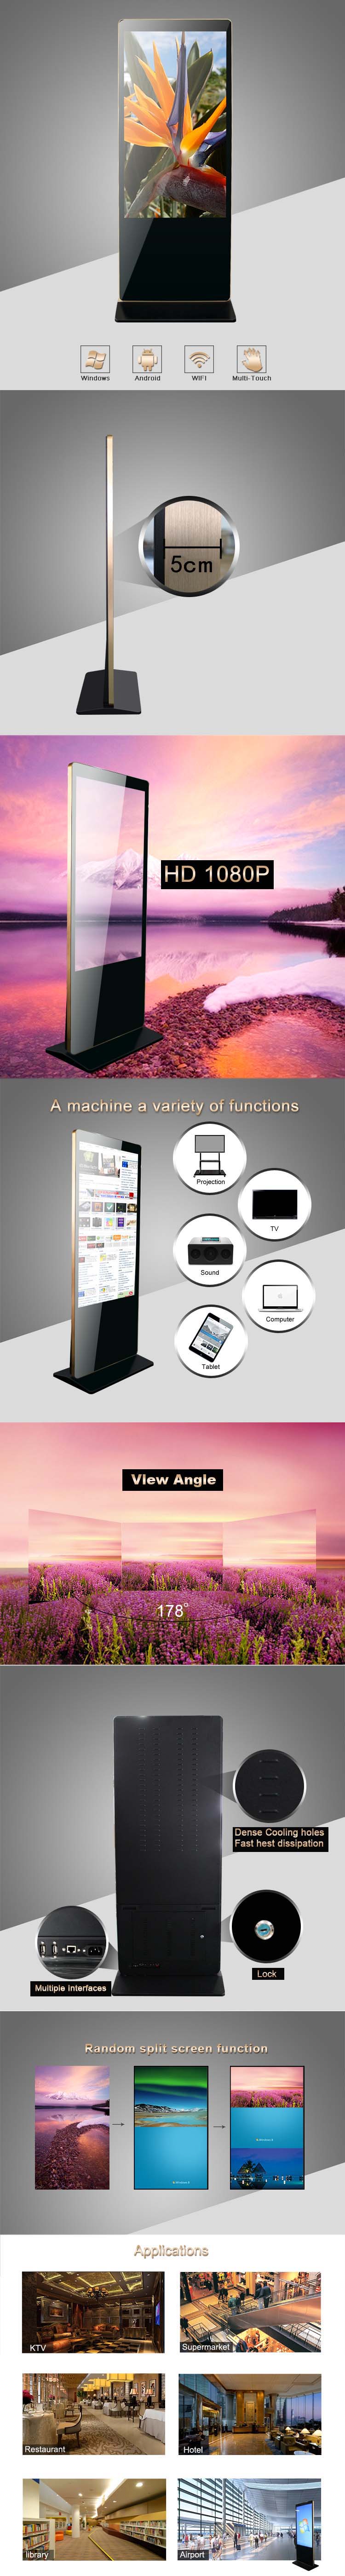 Model Number: MWE955 Ultra-thin Bezel Floor Standing LCD Advertising Player